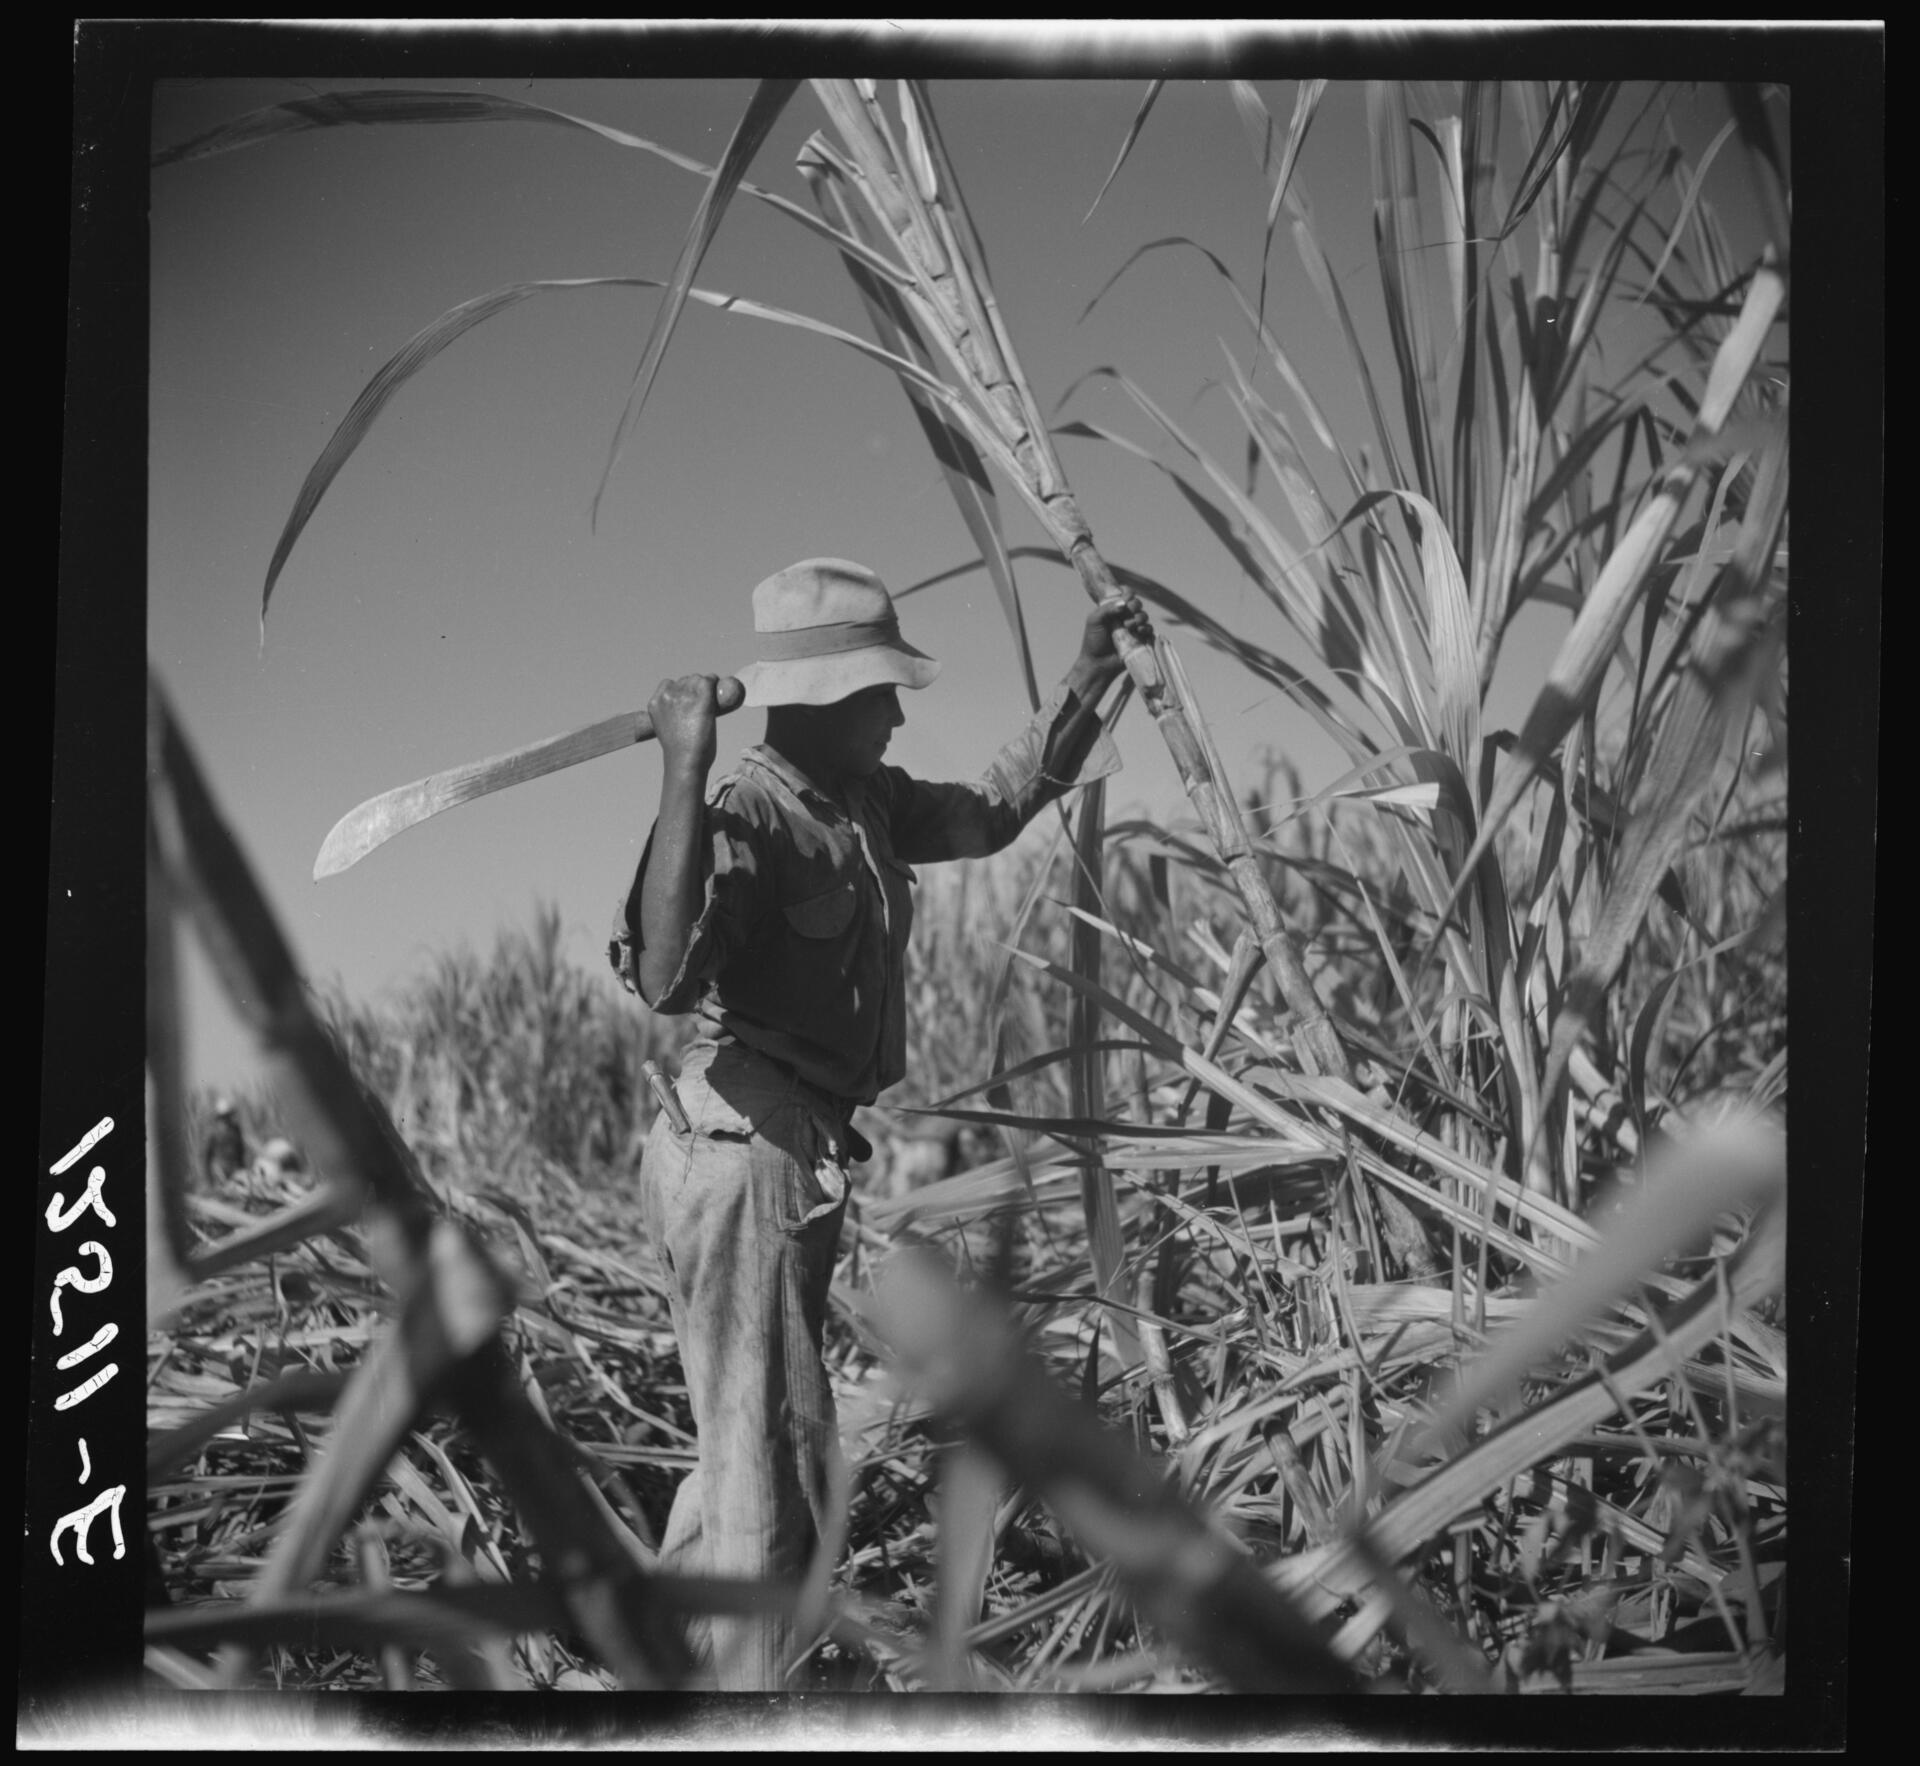 Jíbaro, sugar cane worker photograph by Jack Delano. 